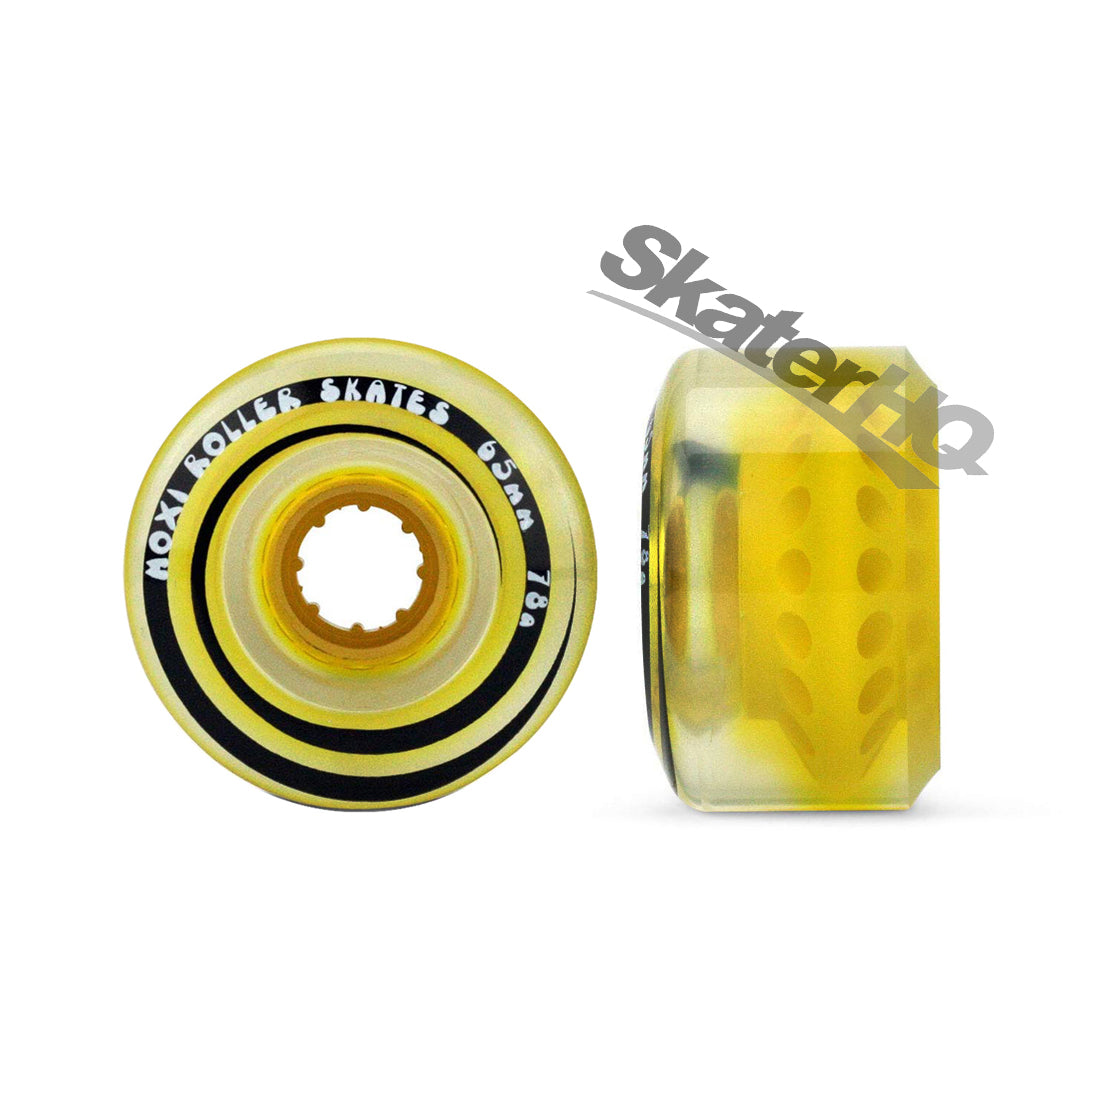 Moxi Gummy 65mm 78a 4pk - Pineapple Yellow Roller Skate Wheels